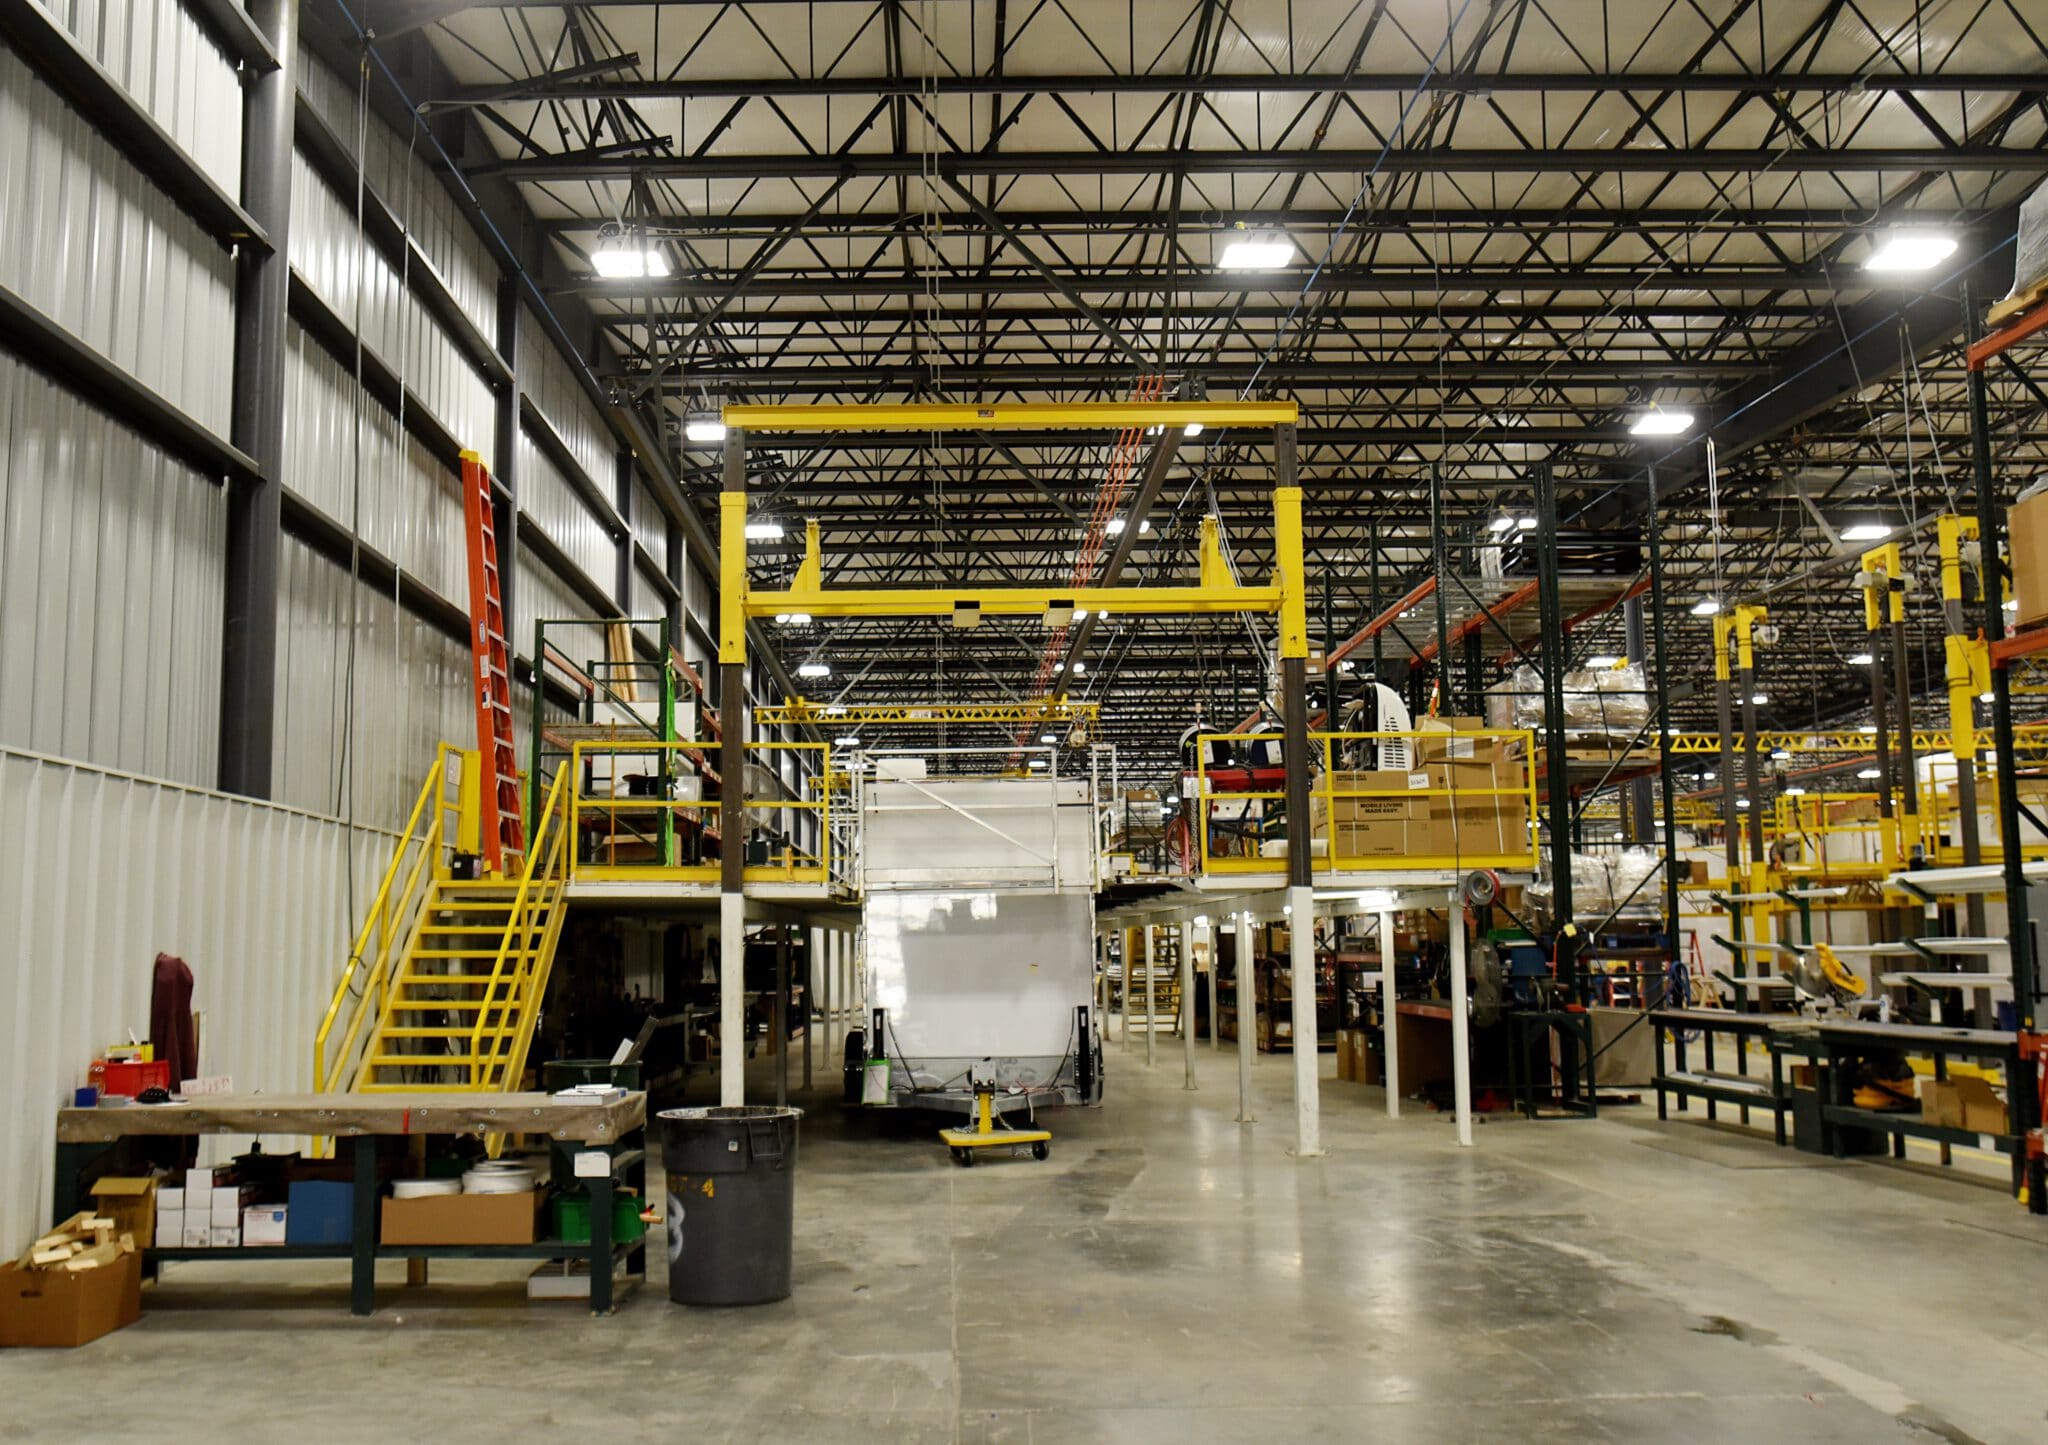 Interior shot of new Satellite Industries warehouse